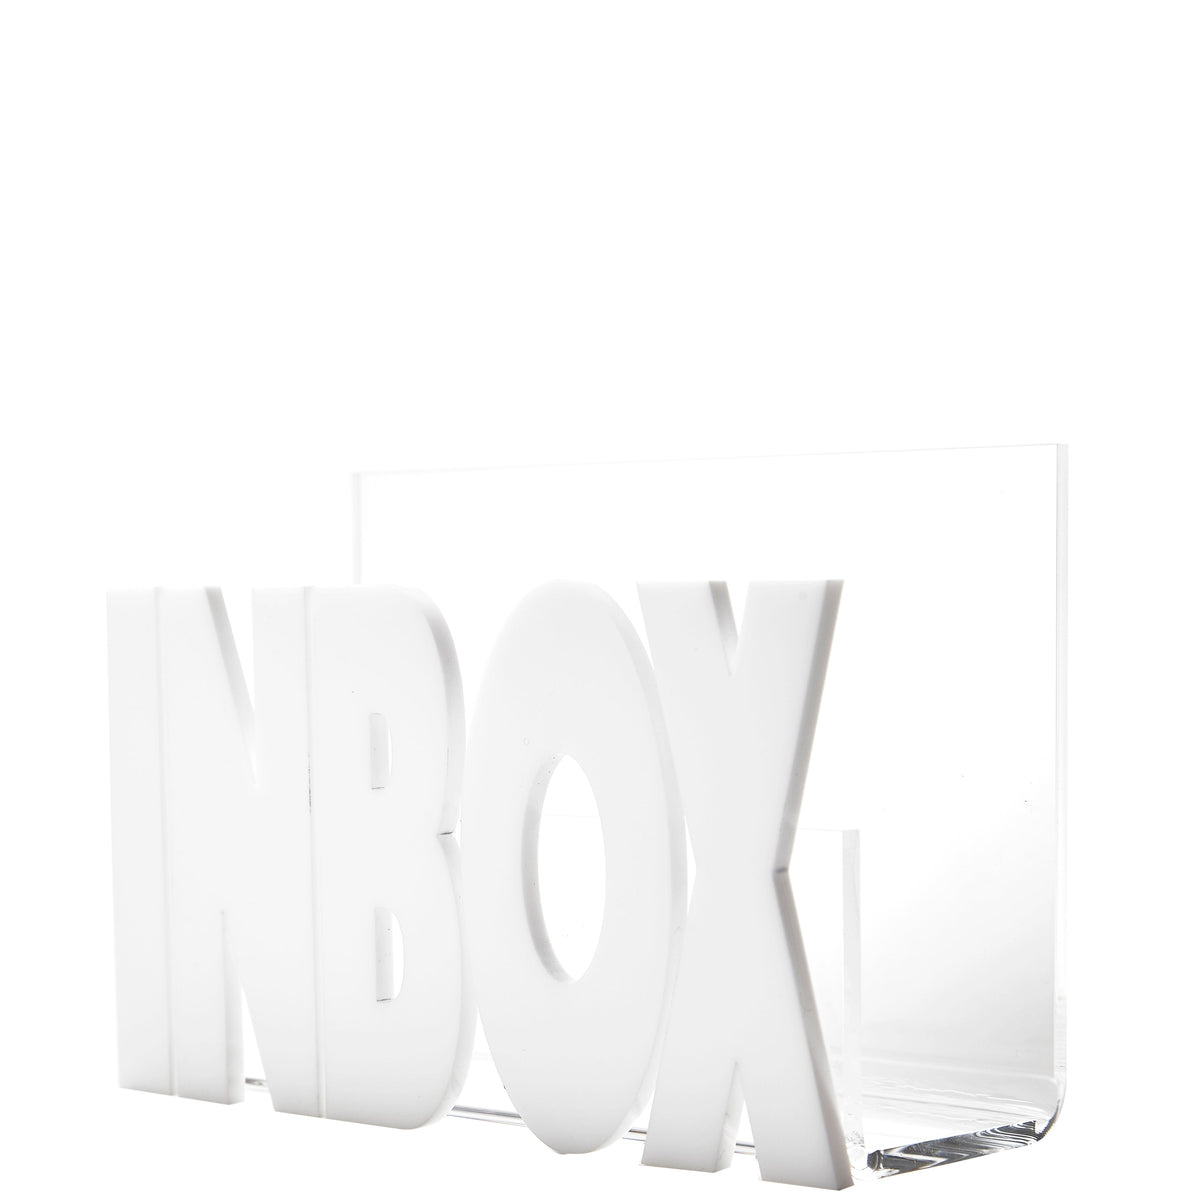 Box INBOX White 7 inches length